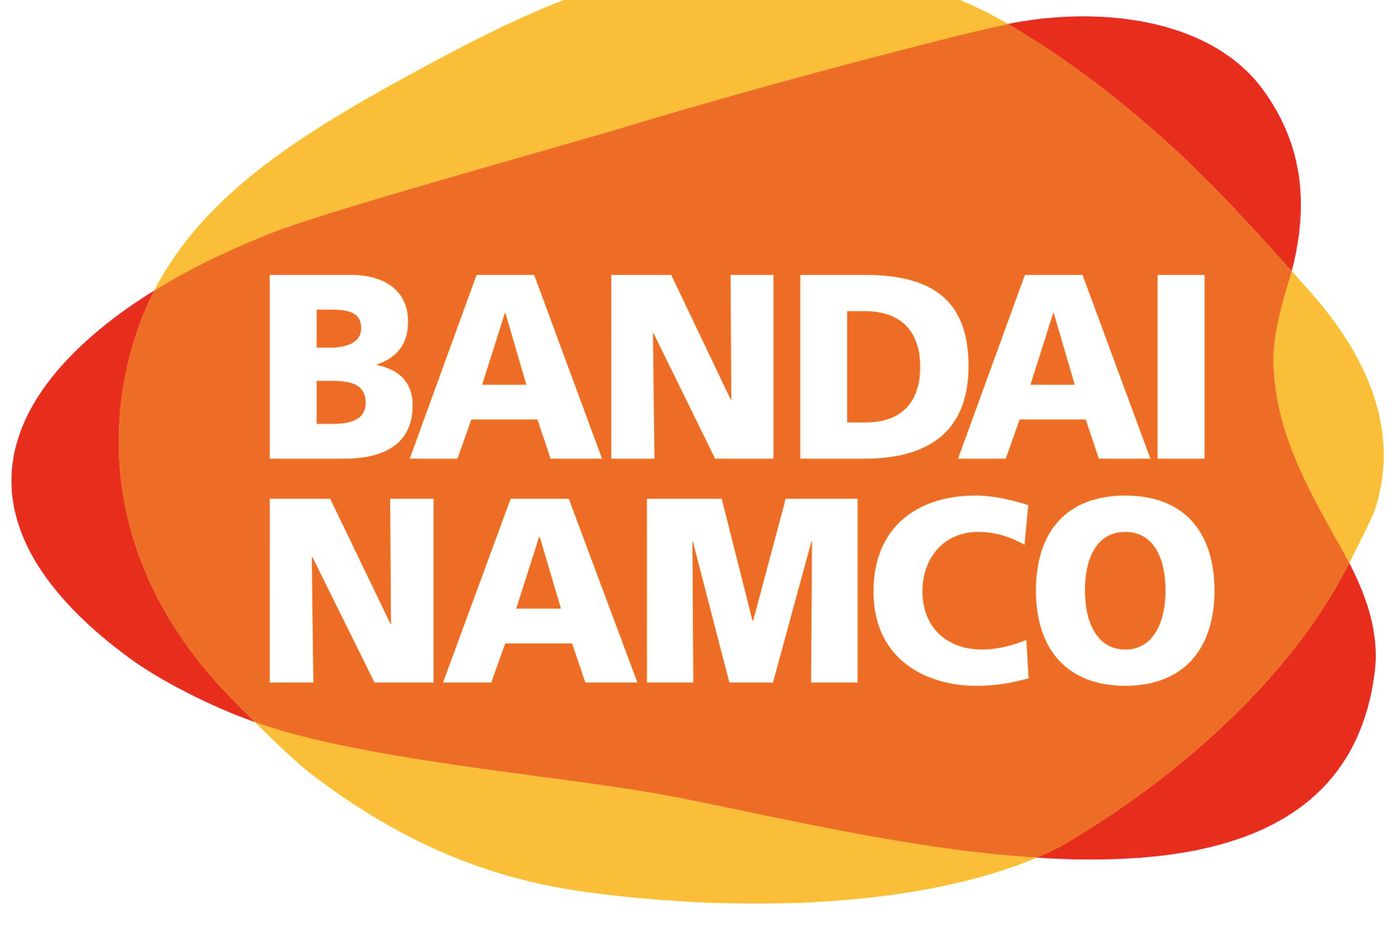 Bandai Namco has a new logo that looks like Twitch's - Polygon